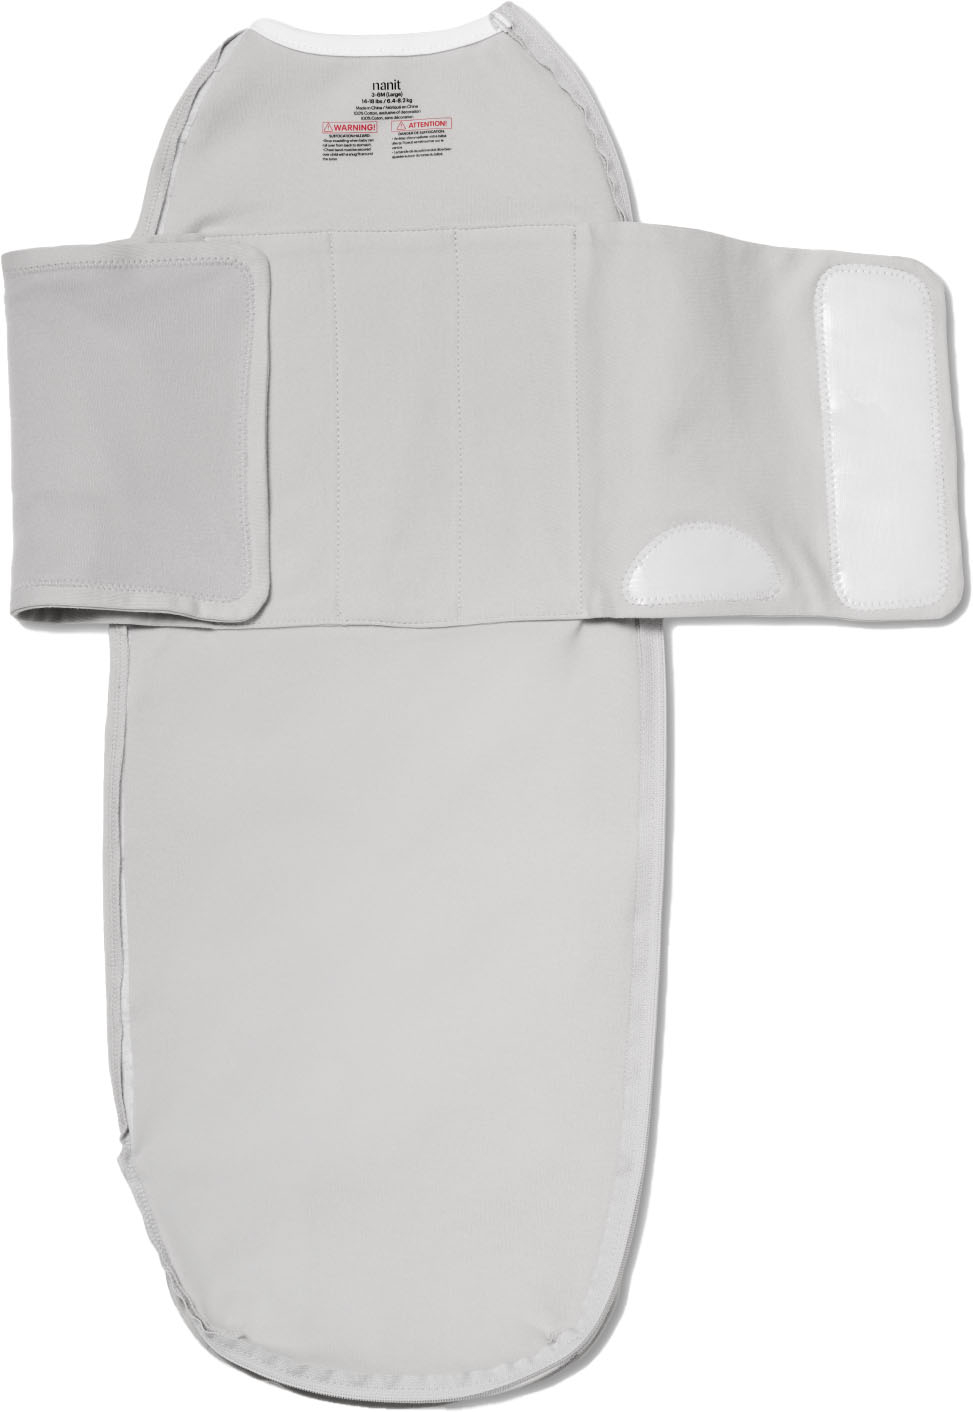 Angle View: Nanit Breathingwear Swaddle - 0-3M - Pebble Grey - Gray